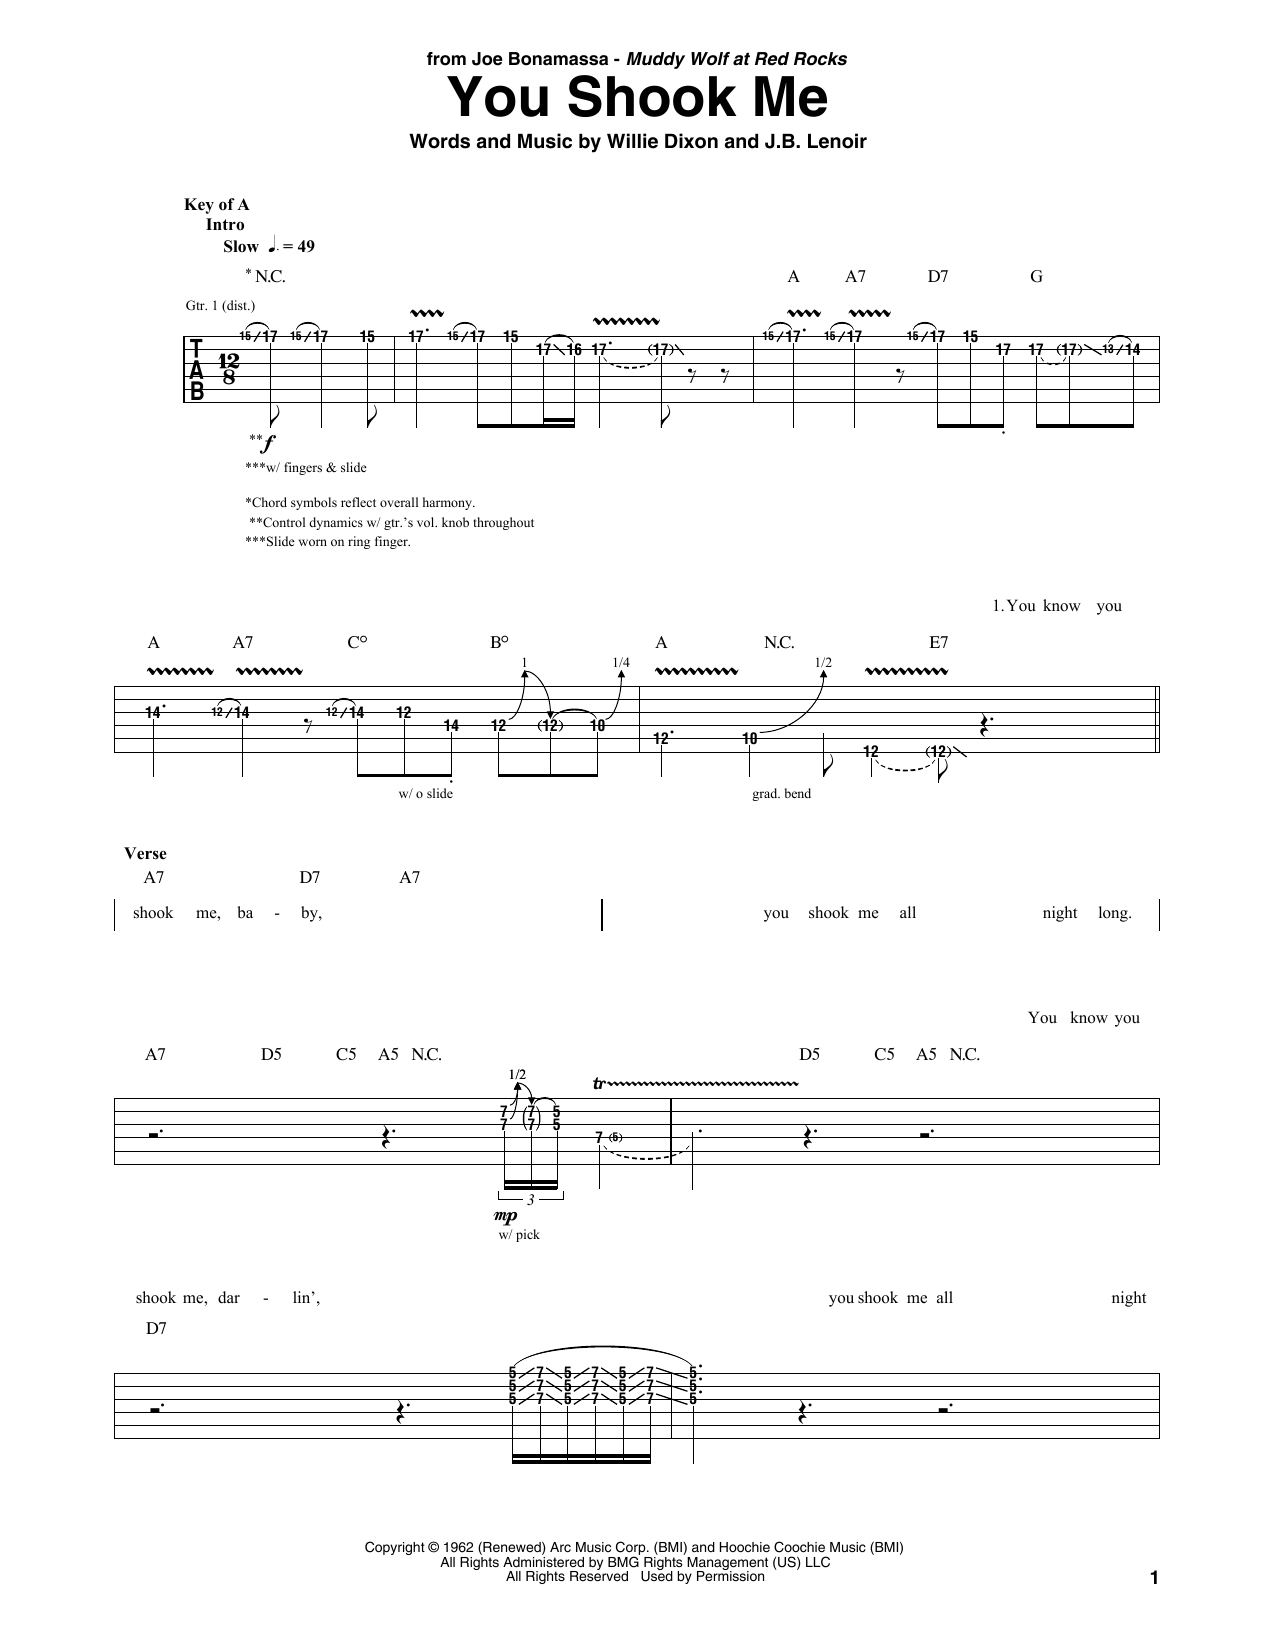 Download Joe Bonamassa You Shook Me Sheet Music and learn how to play Guitar Tab PDF digital score in minutes